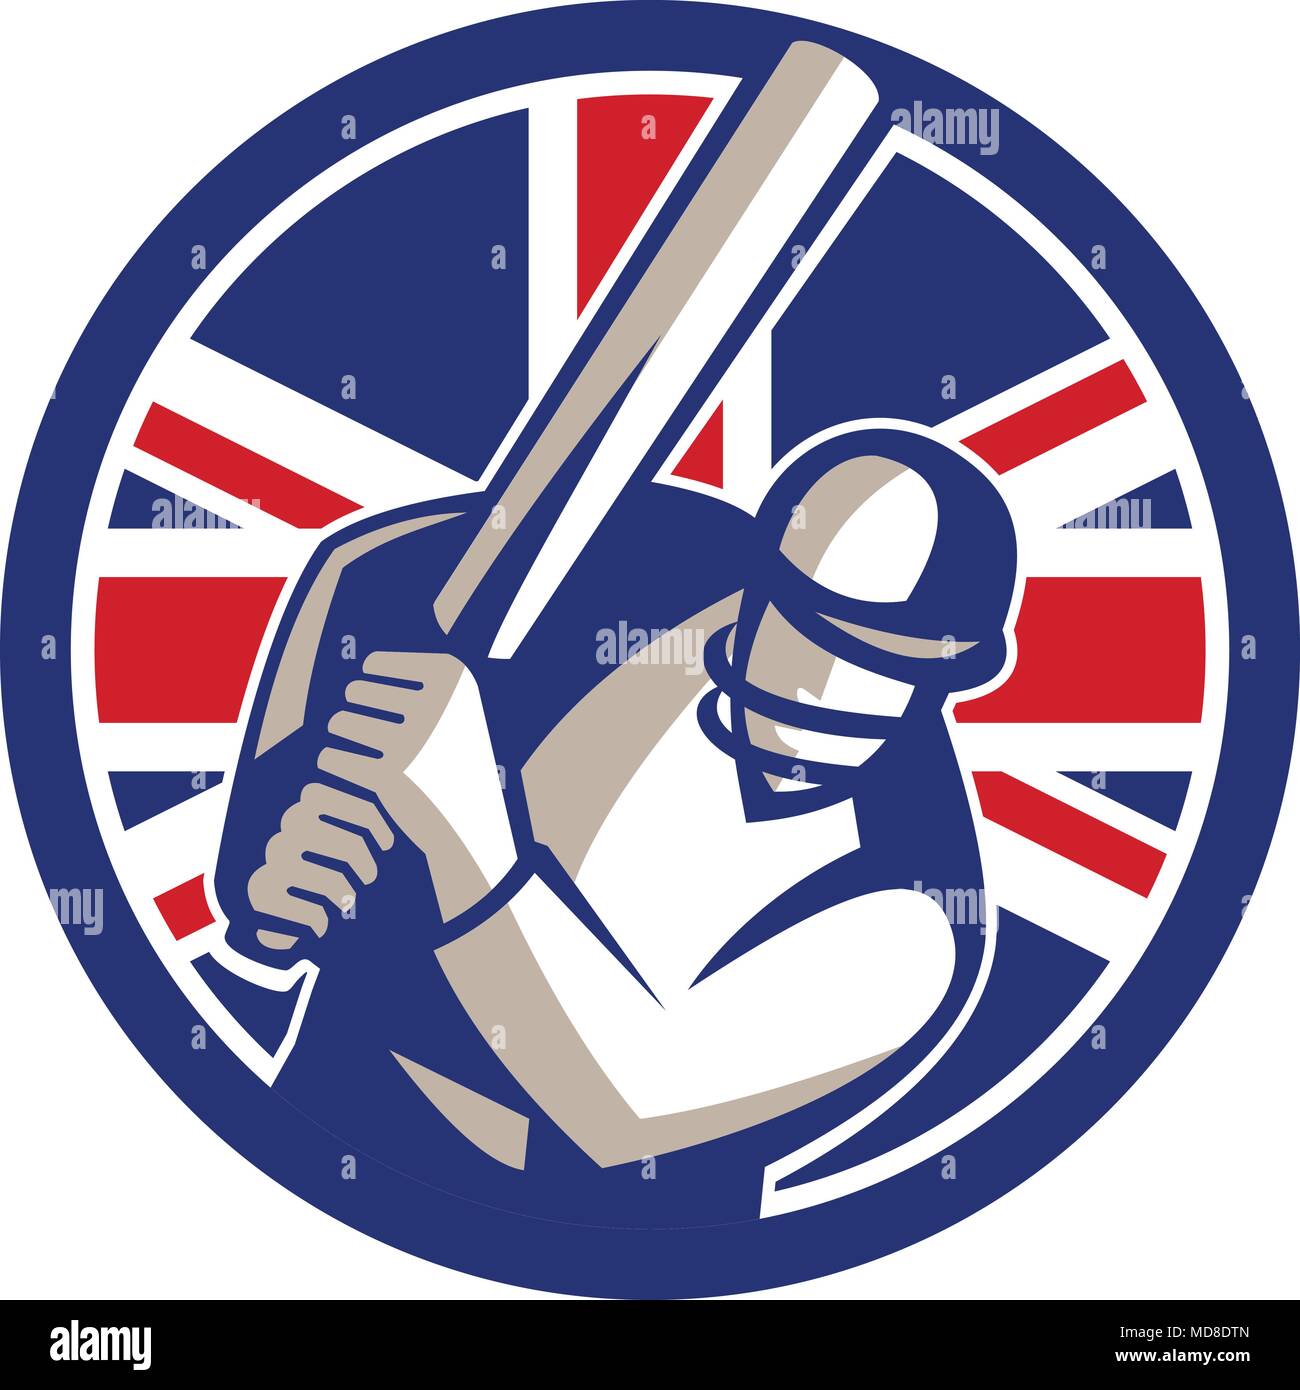 Icon retro style illustration of a British cricket batsman player batting with bat and with United Kingdom UK, Great Britain Union Jack flag set insid Stock Vector